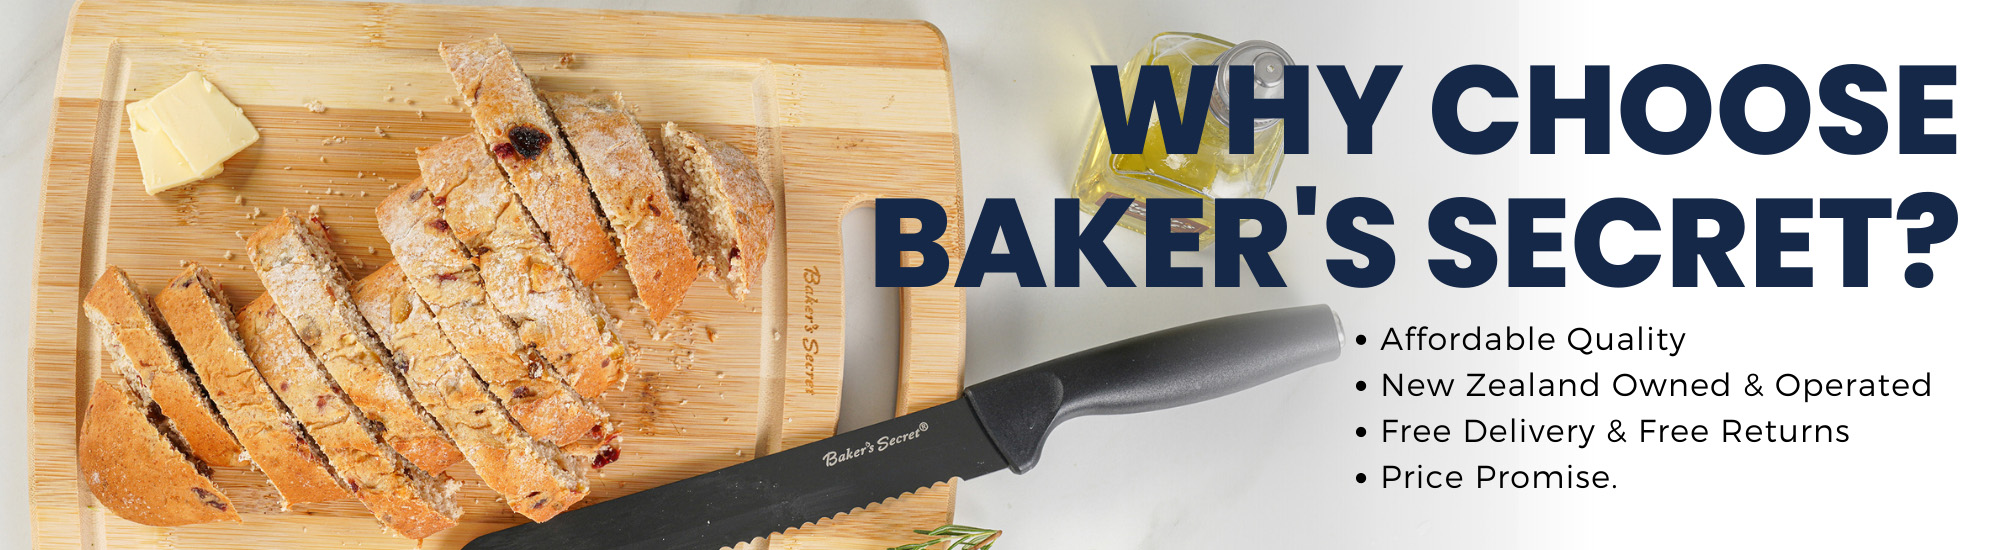 Why Choose Baker's Secret Banner